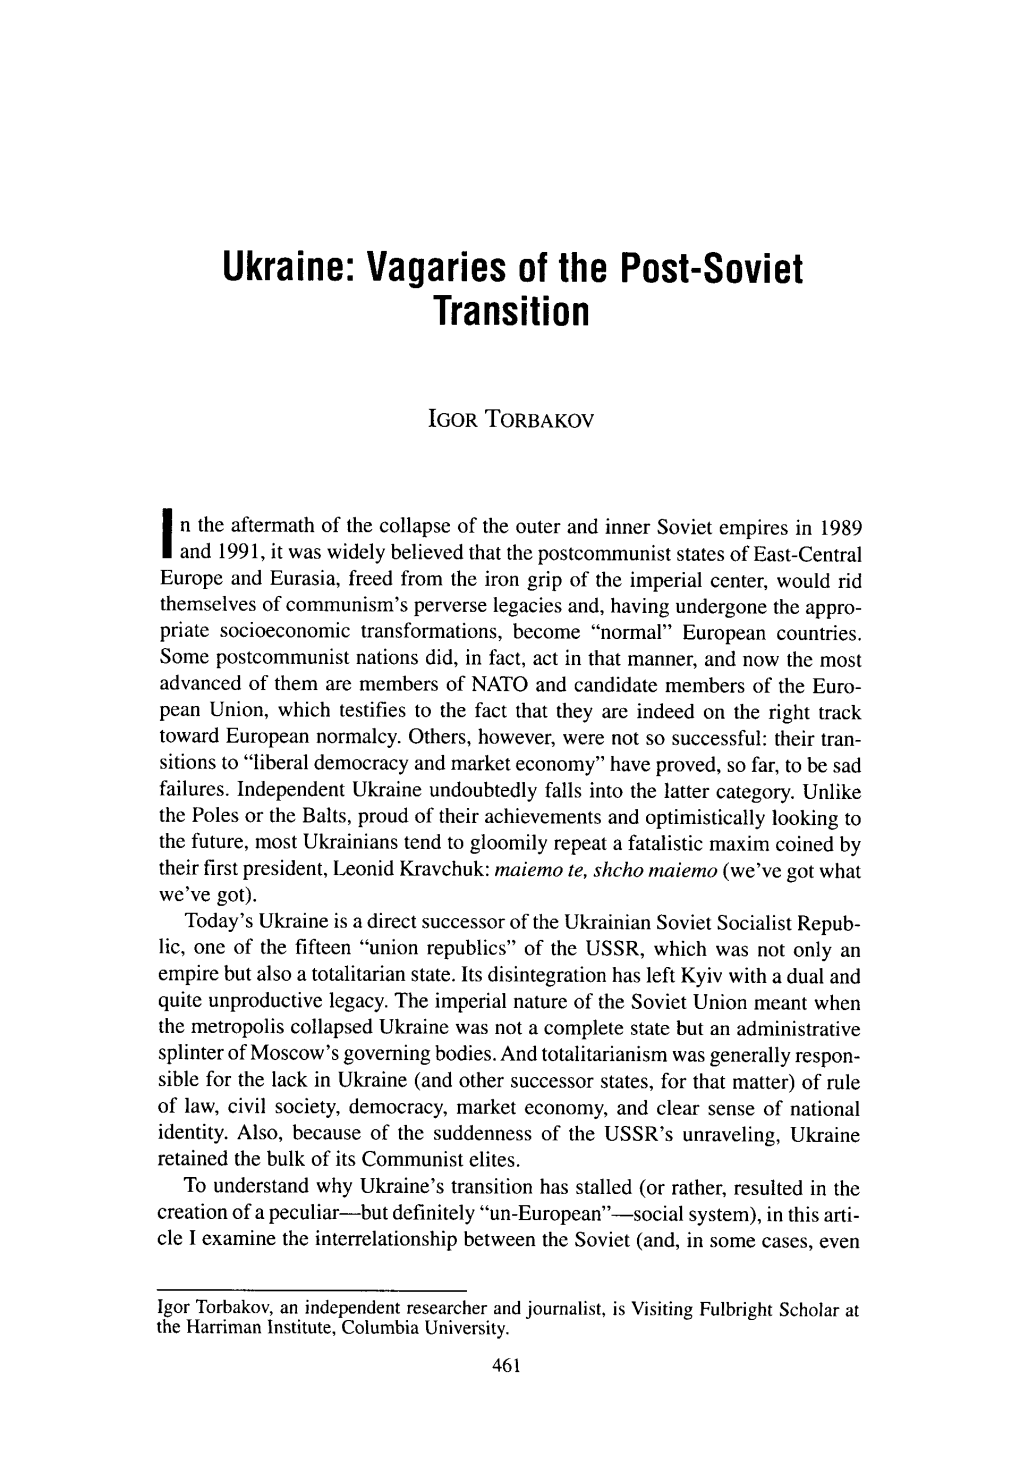 Ukraine: Vagaries of the Post-Soviet Transition